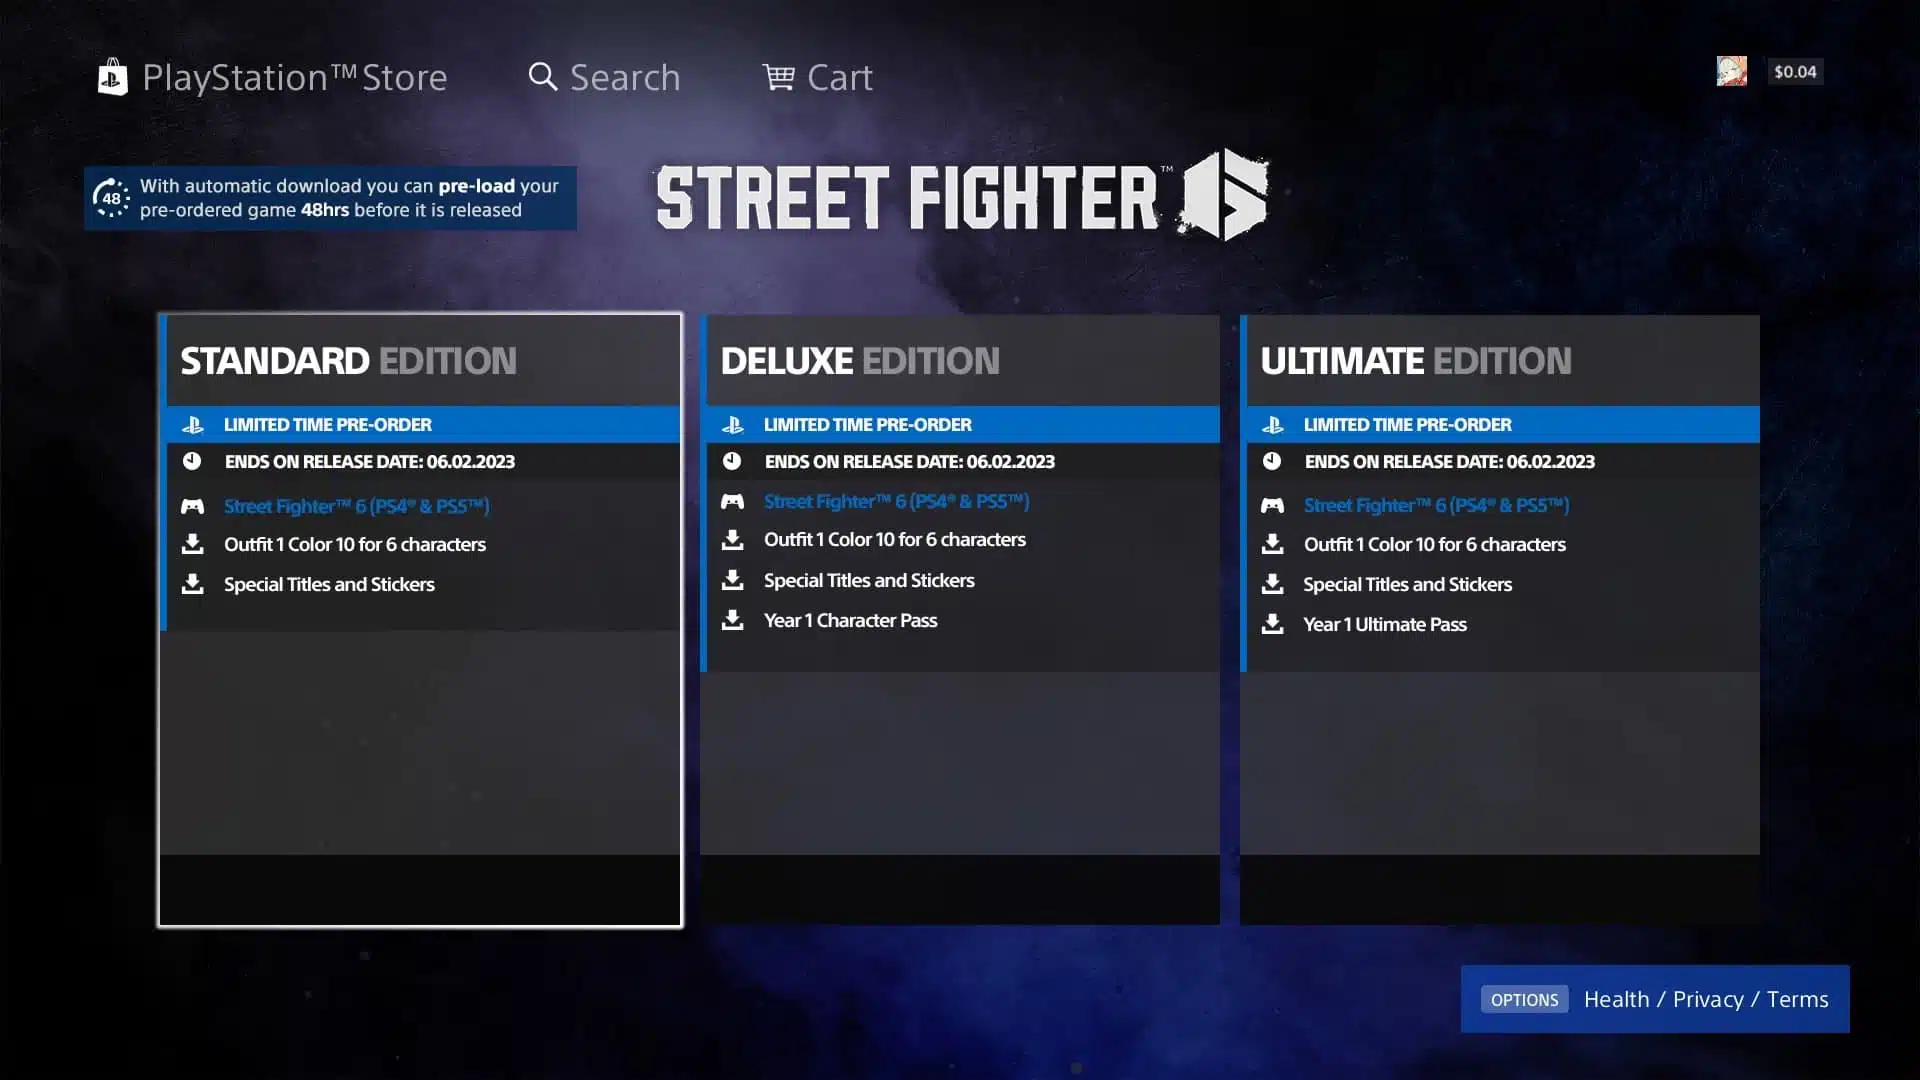 Street Fighter 6 - Jogos de PS4 e PS5